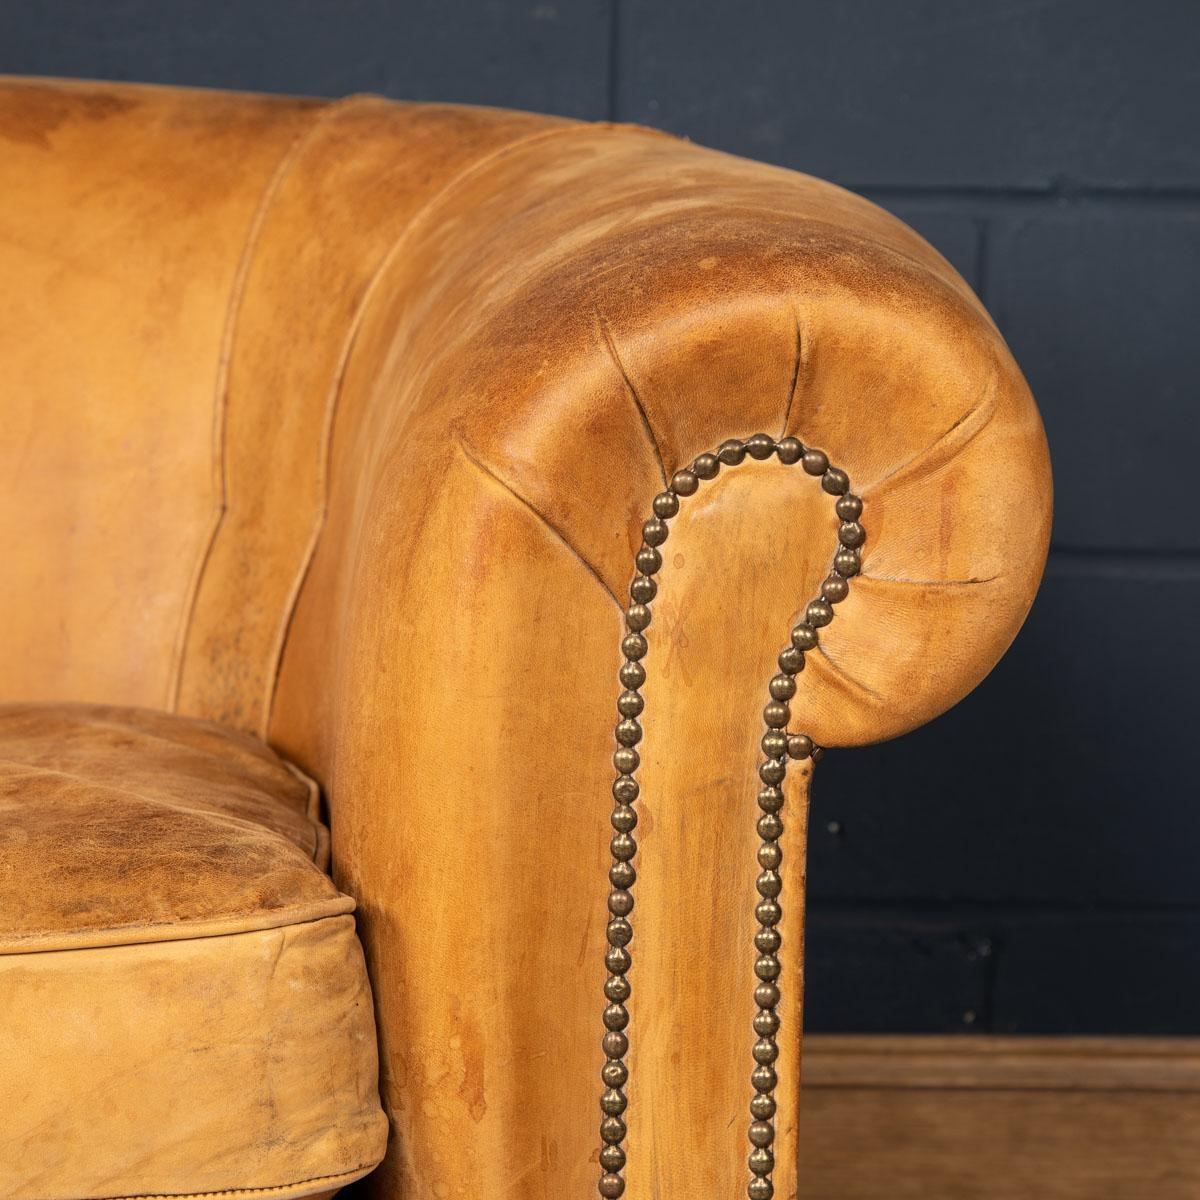 worn leather sofa